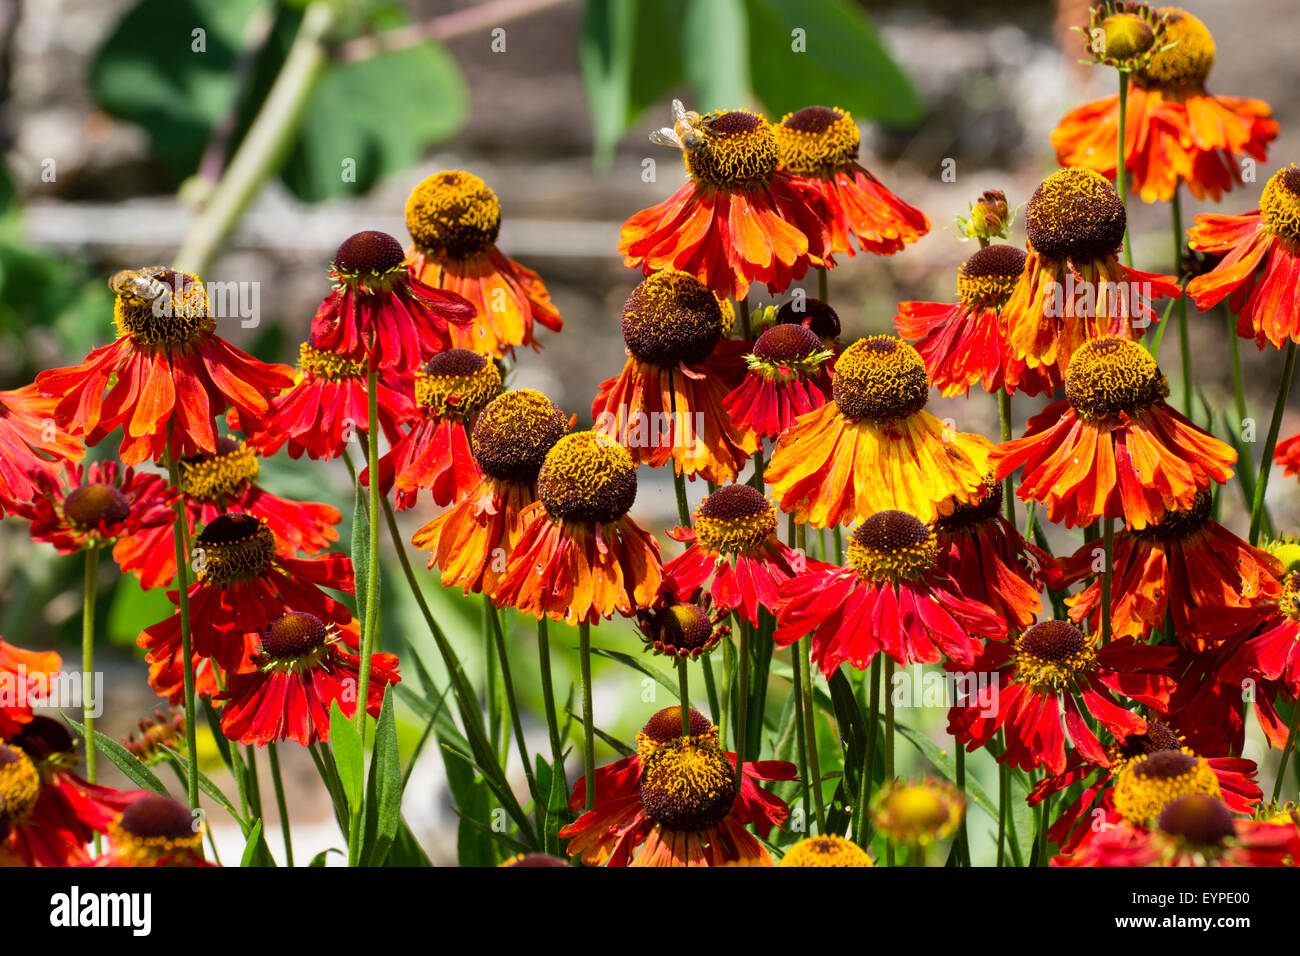 Bright July flowers of the sneezeweed, Helenium 'Moerheim Beauty' Stock Photo